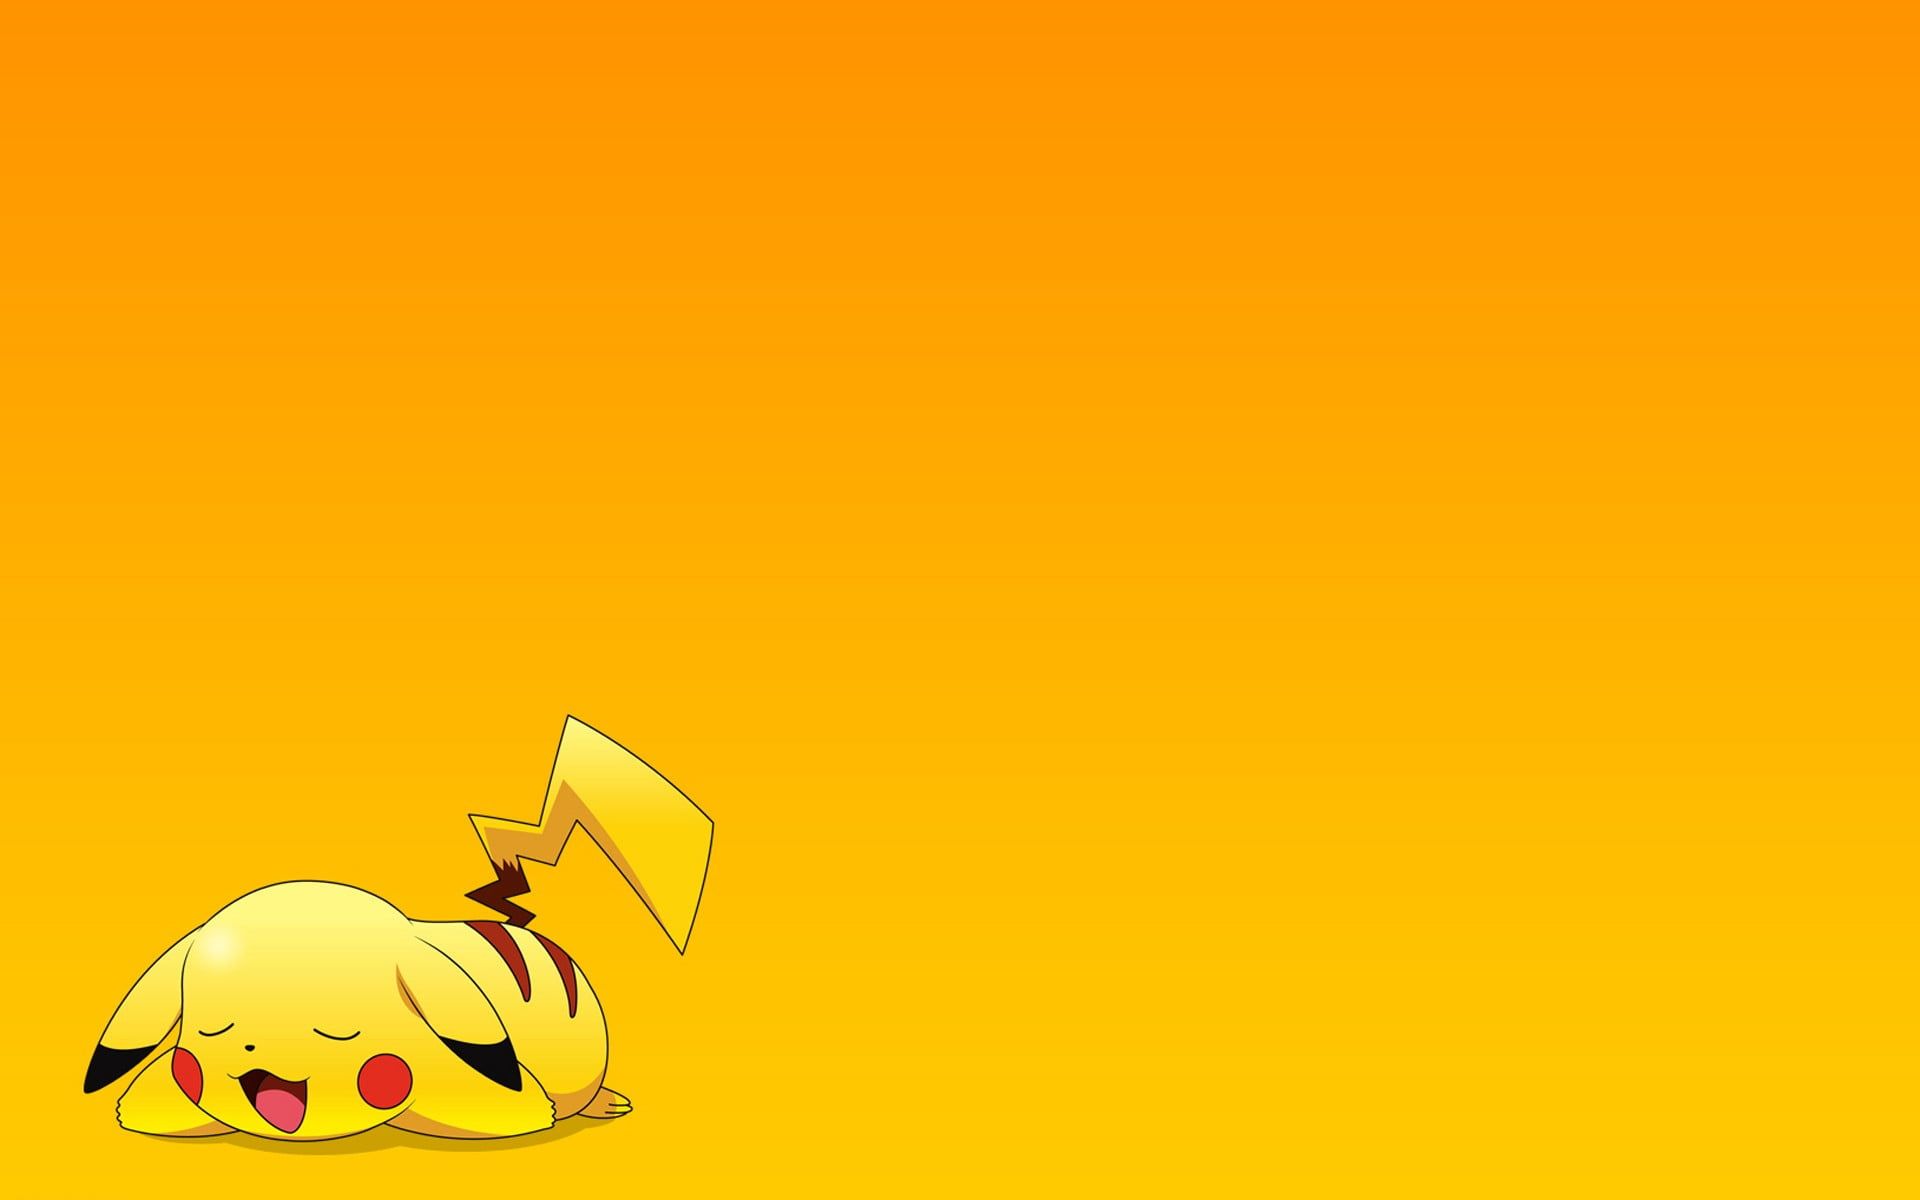 Togepi and Pikachu Wallpaper